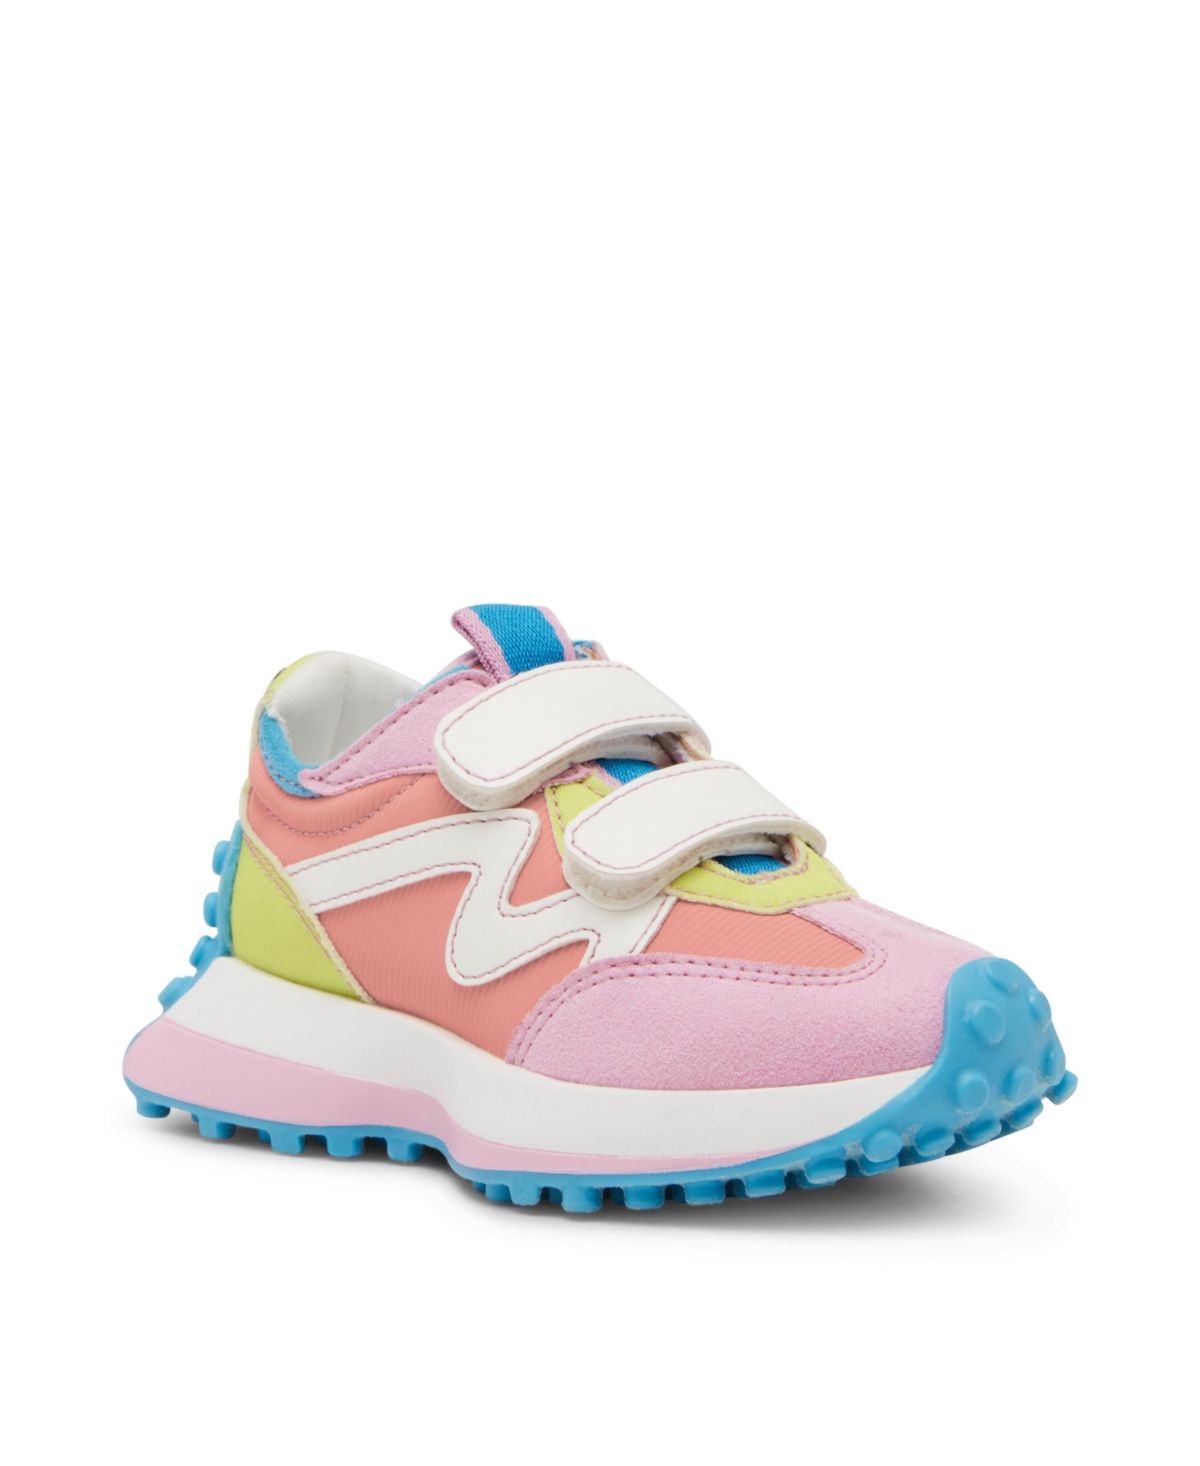 Steve Madden Kids' Toddler Girls Tcampo Comfort Sneakers In Bright Multi